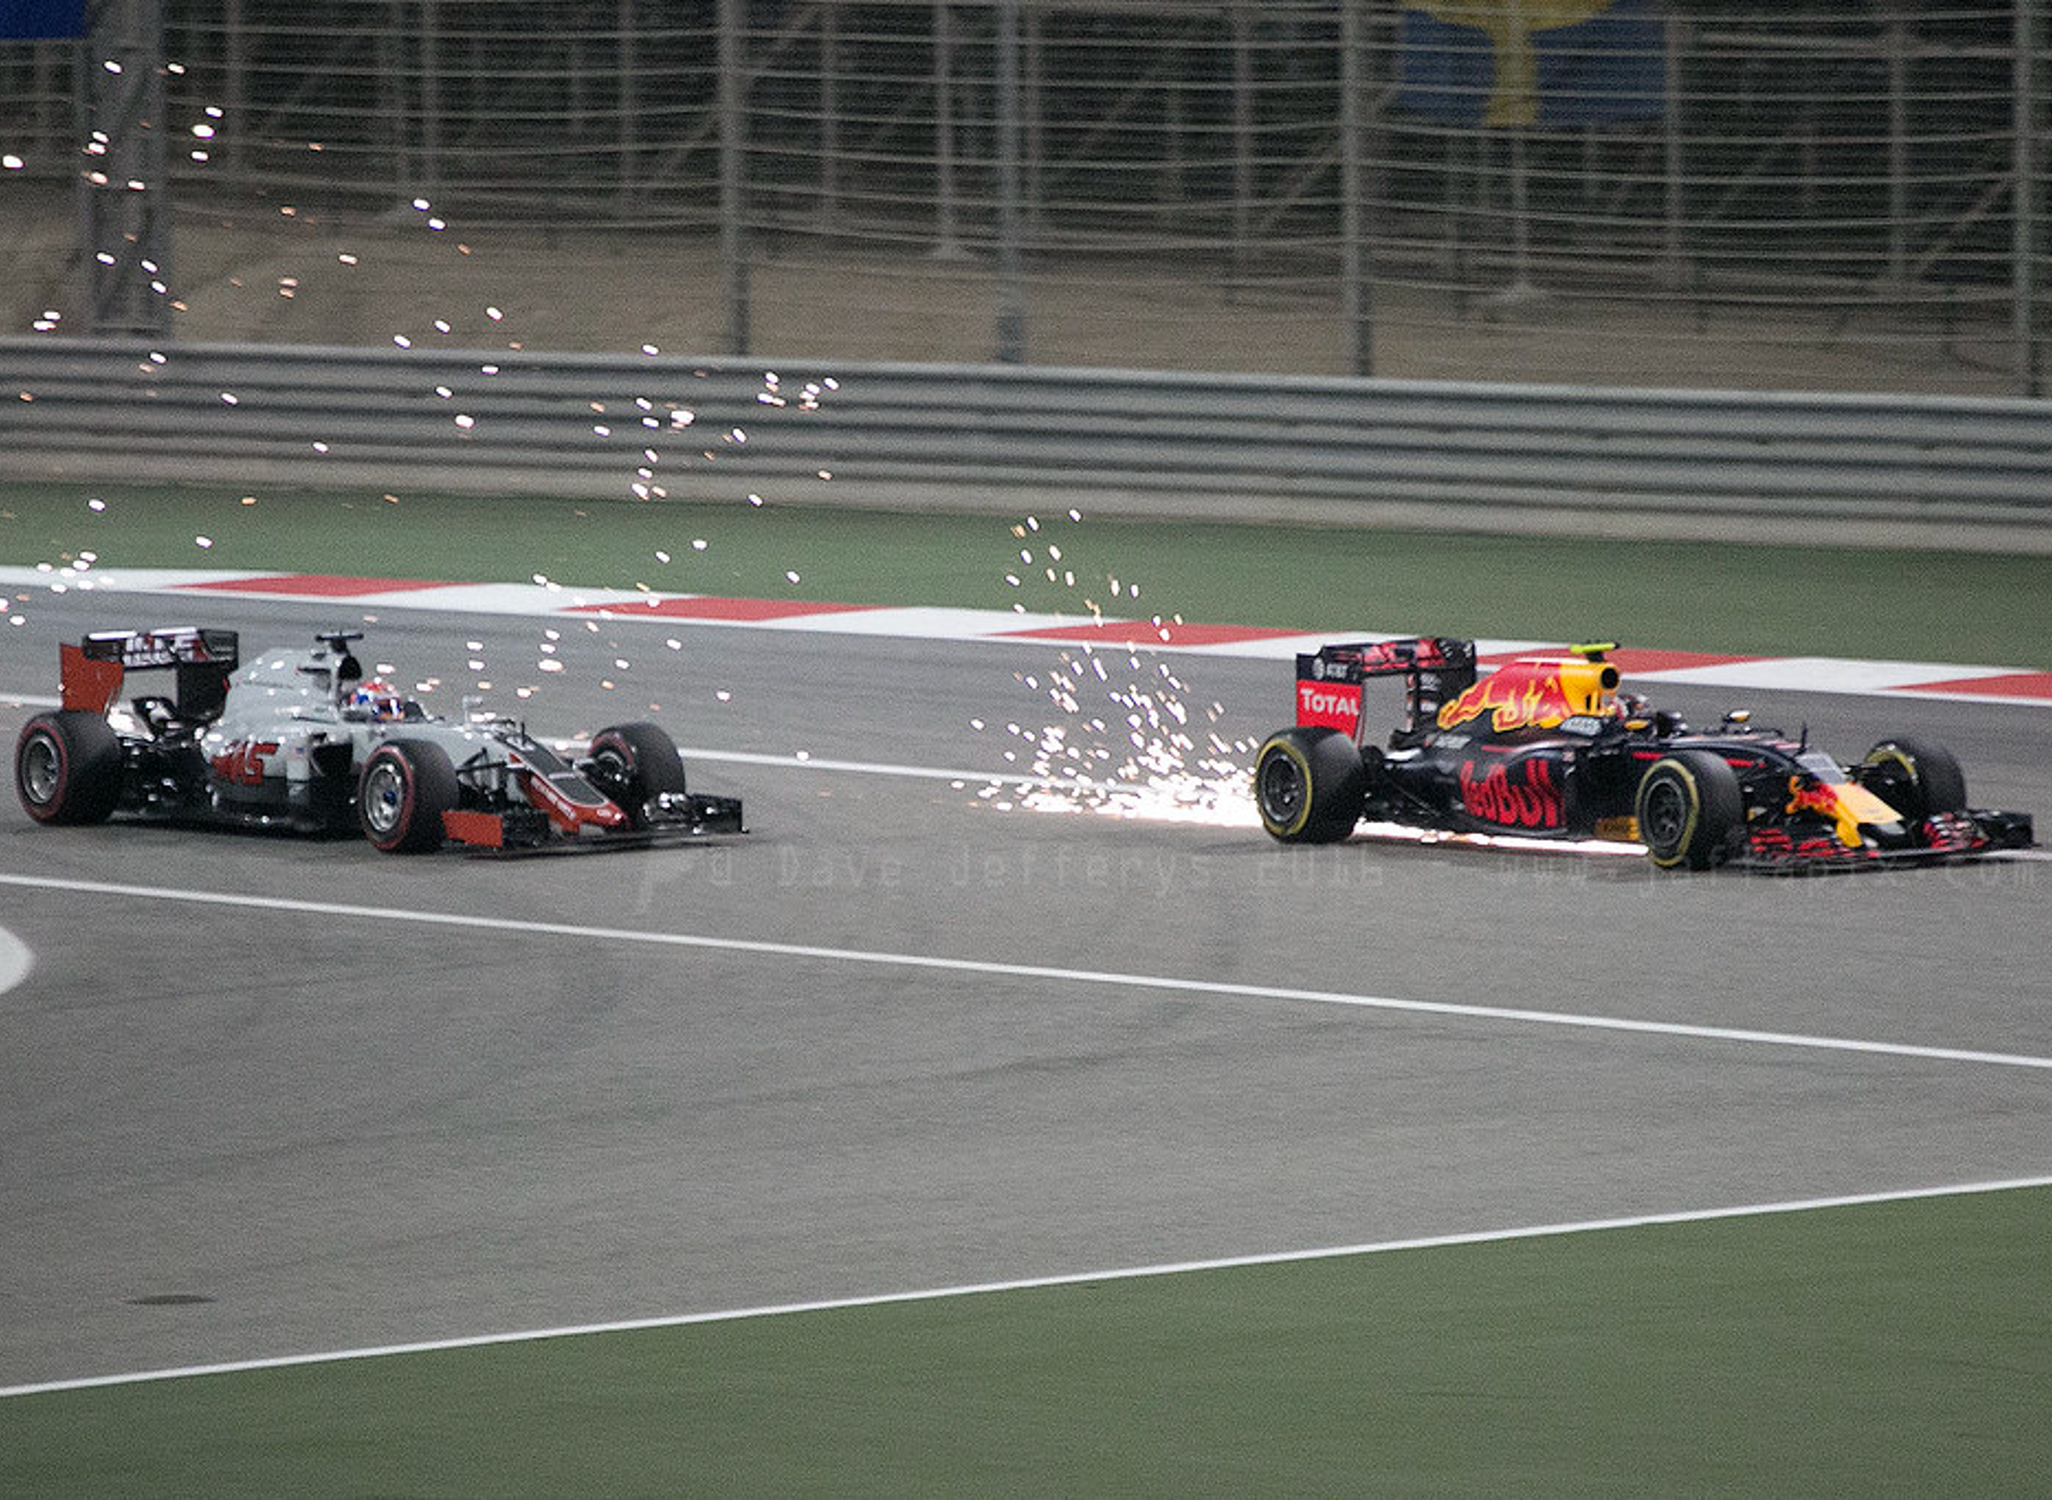 F1 race - Ricciardo sparking past Grosjean for 4th in 2016.